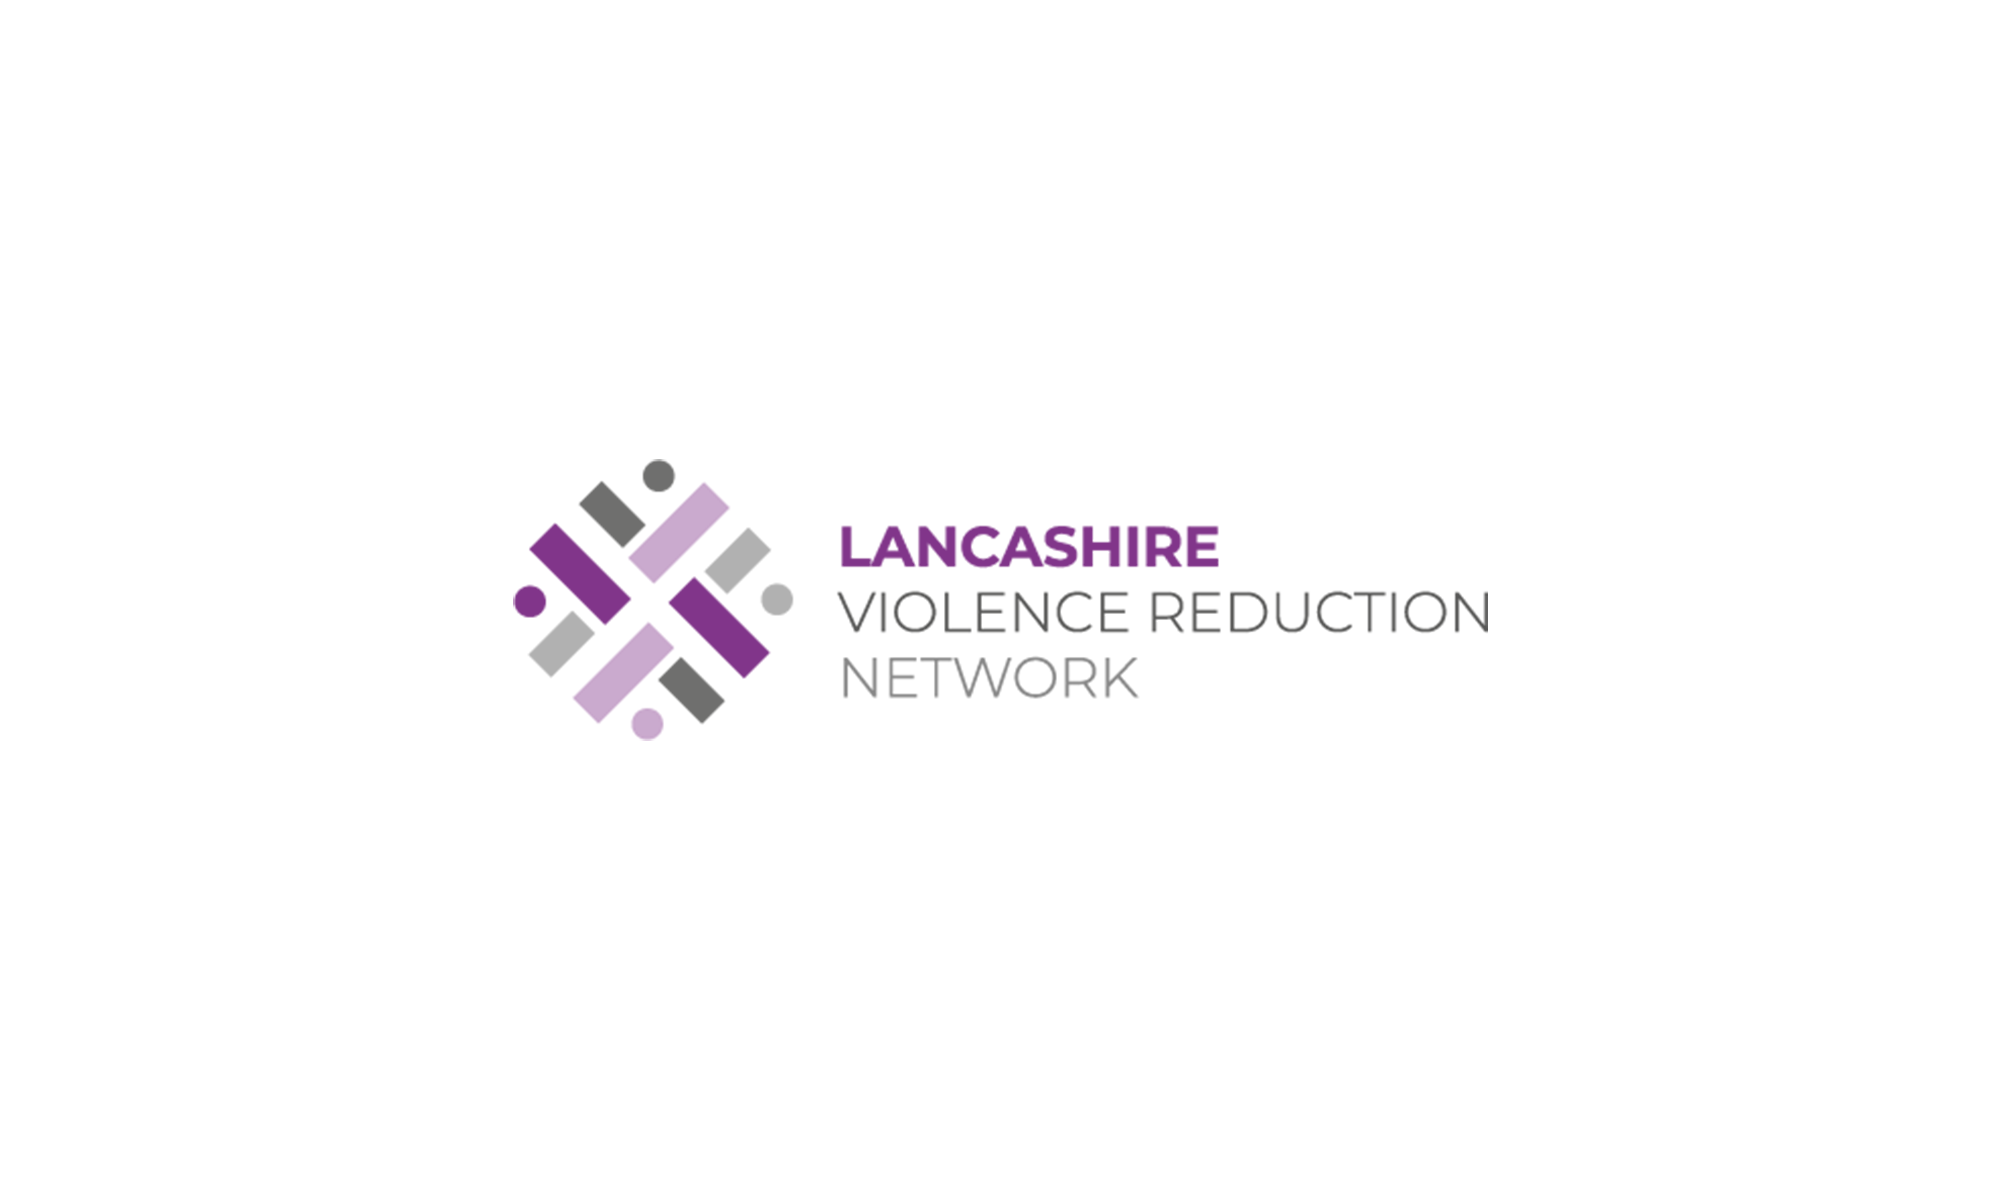 lancashire violence reduction network worded logo